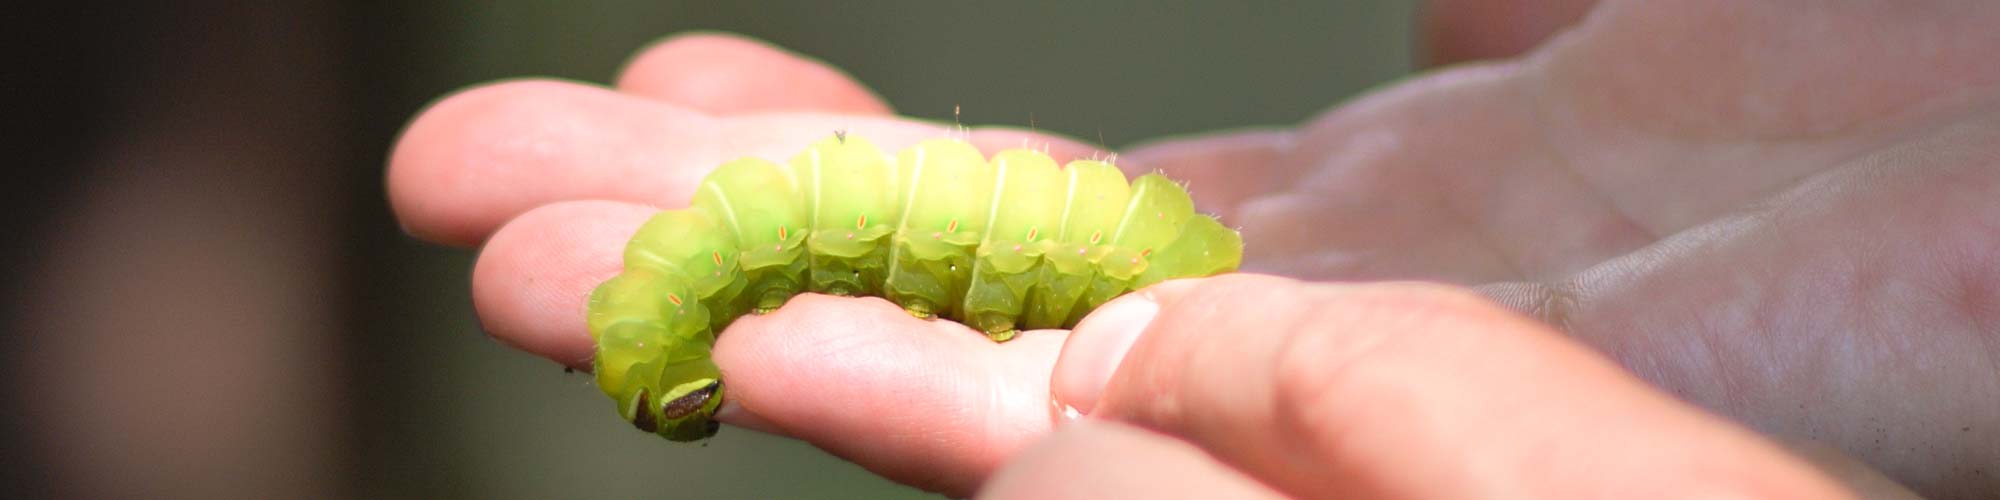 Luna moth caterpillar in hand